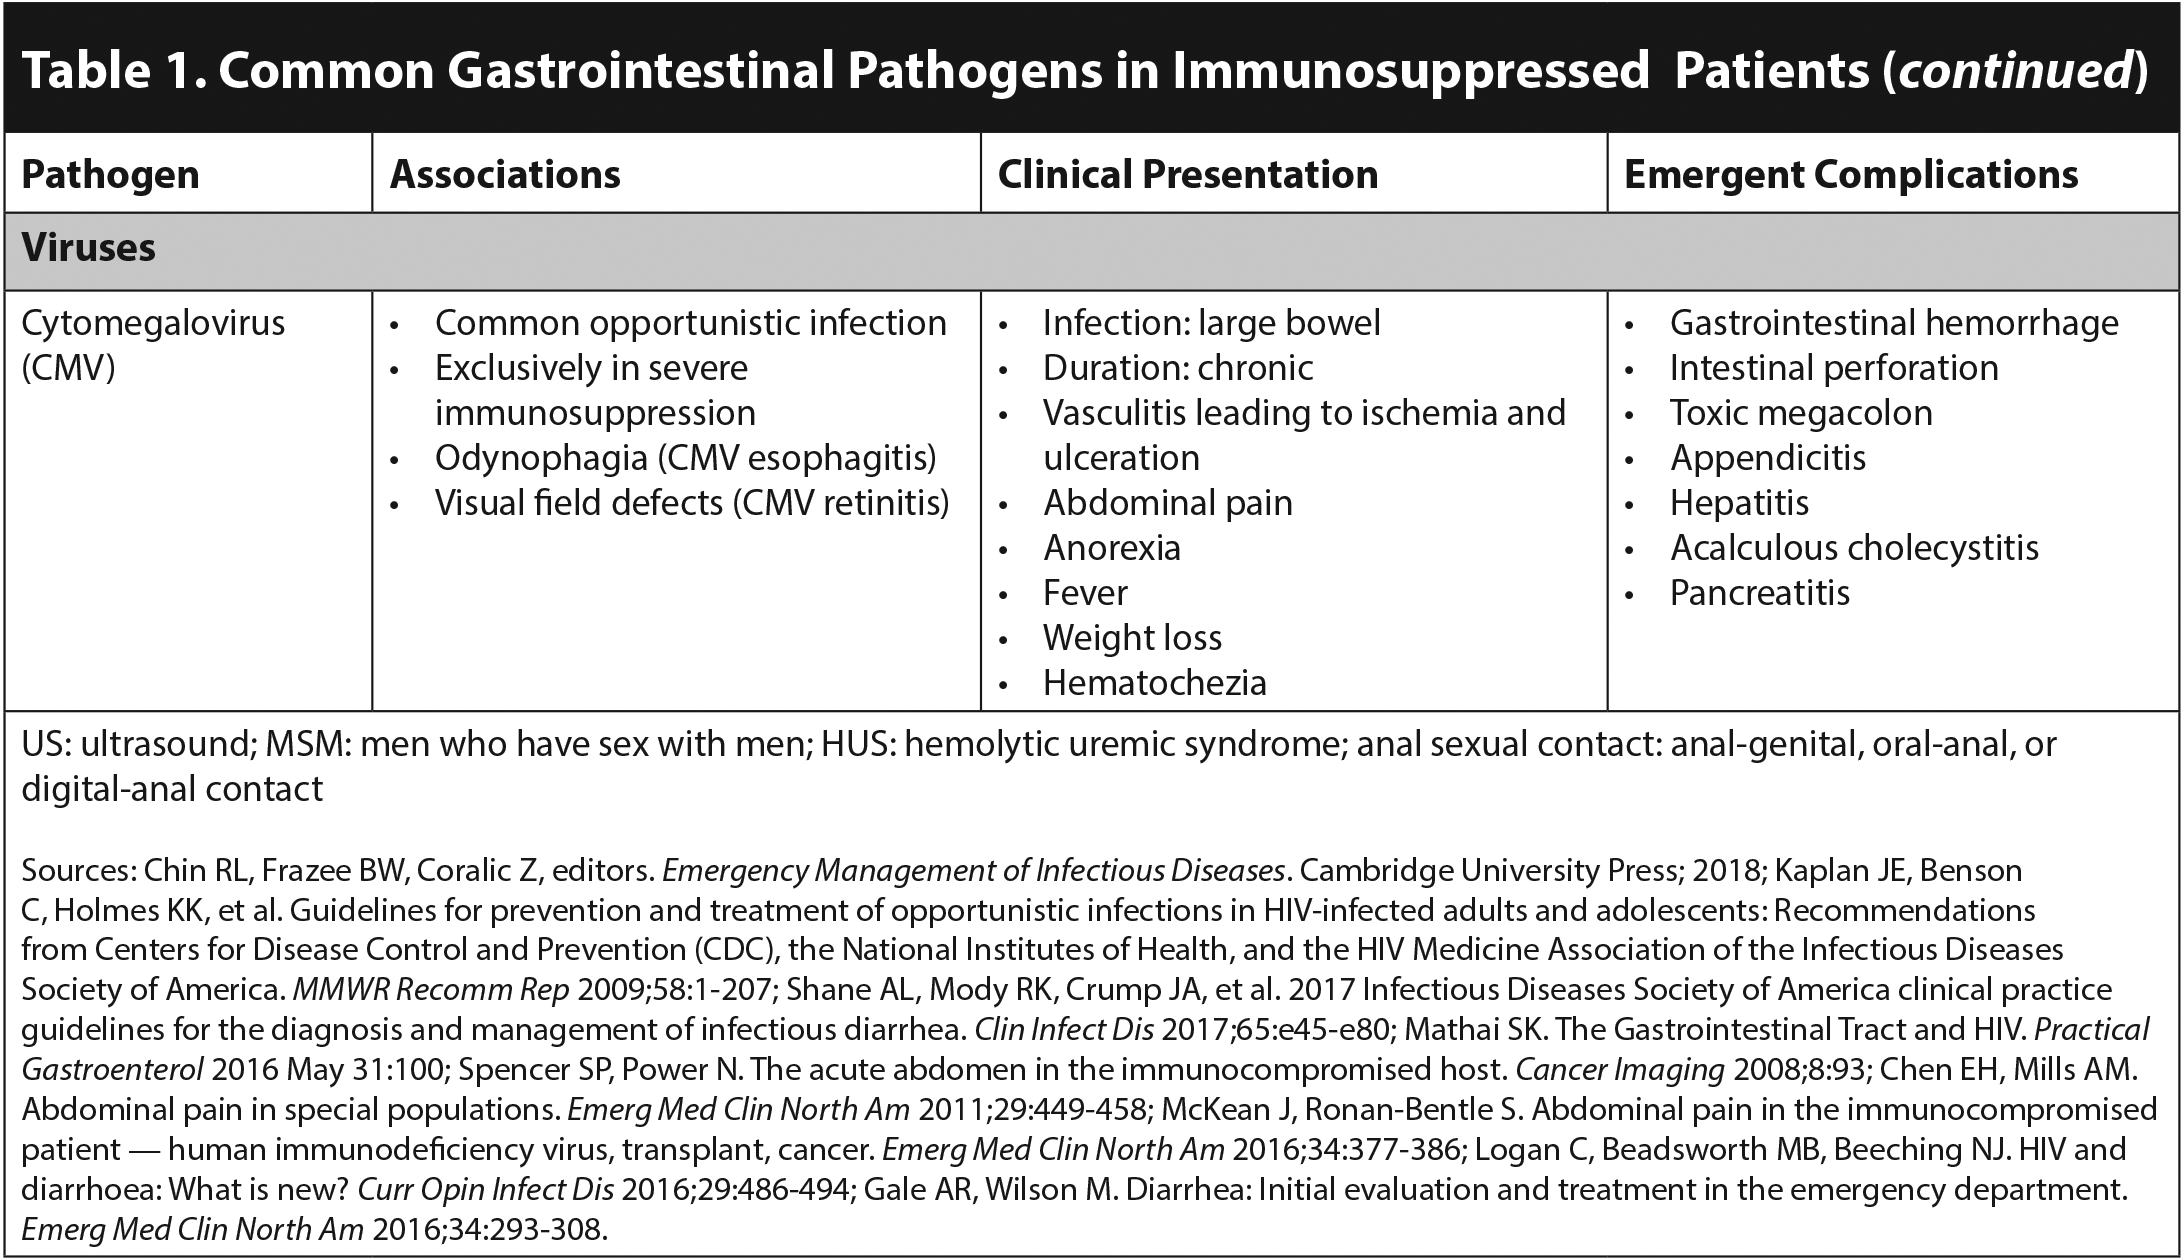 Common Gastrointestinal Pathogens table